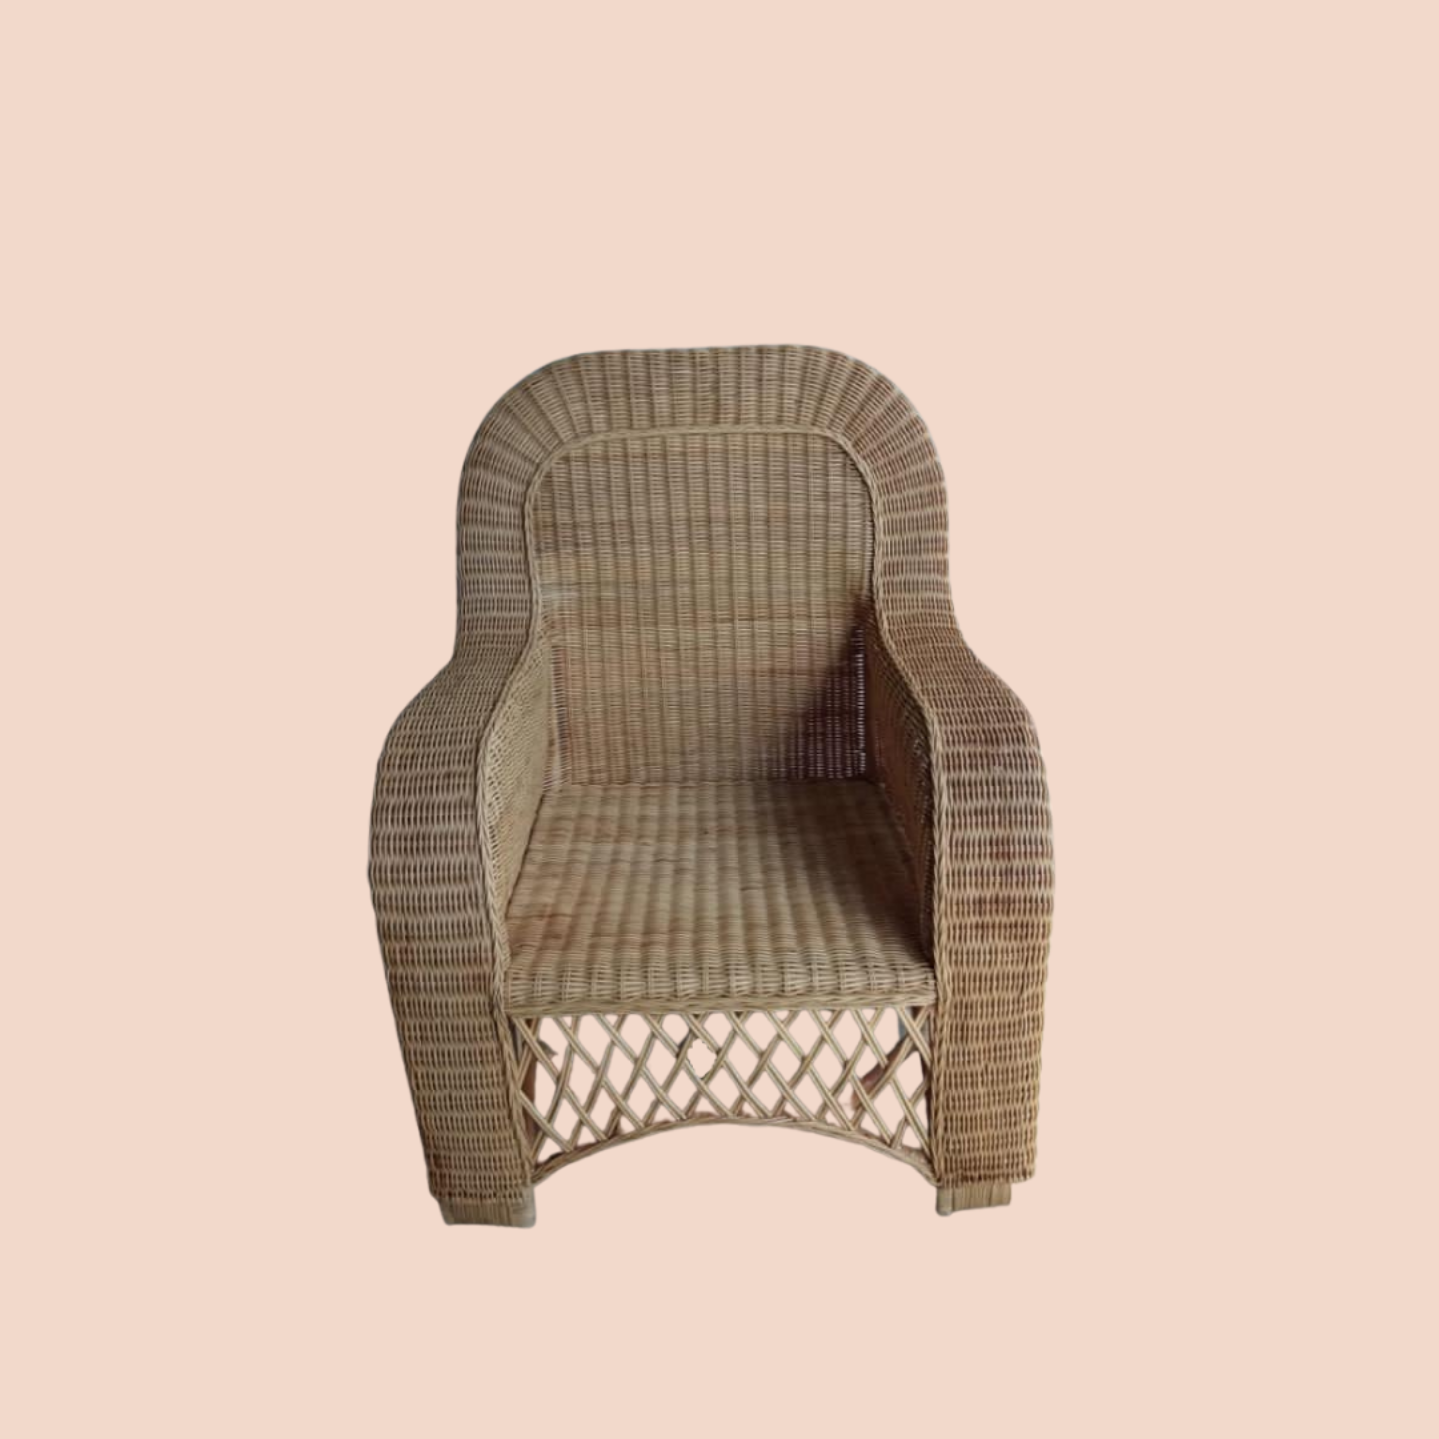 Victoria Veranda Arm Chair